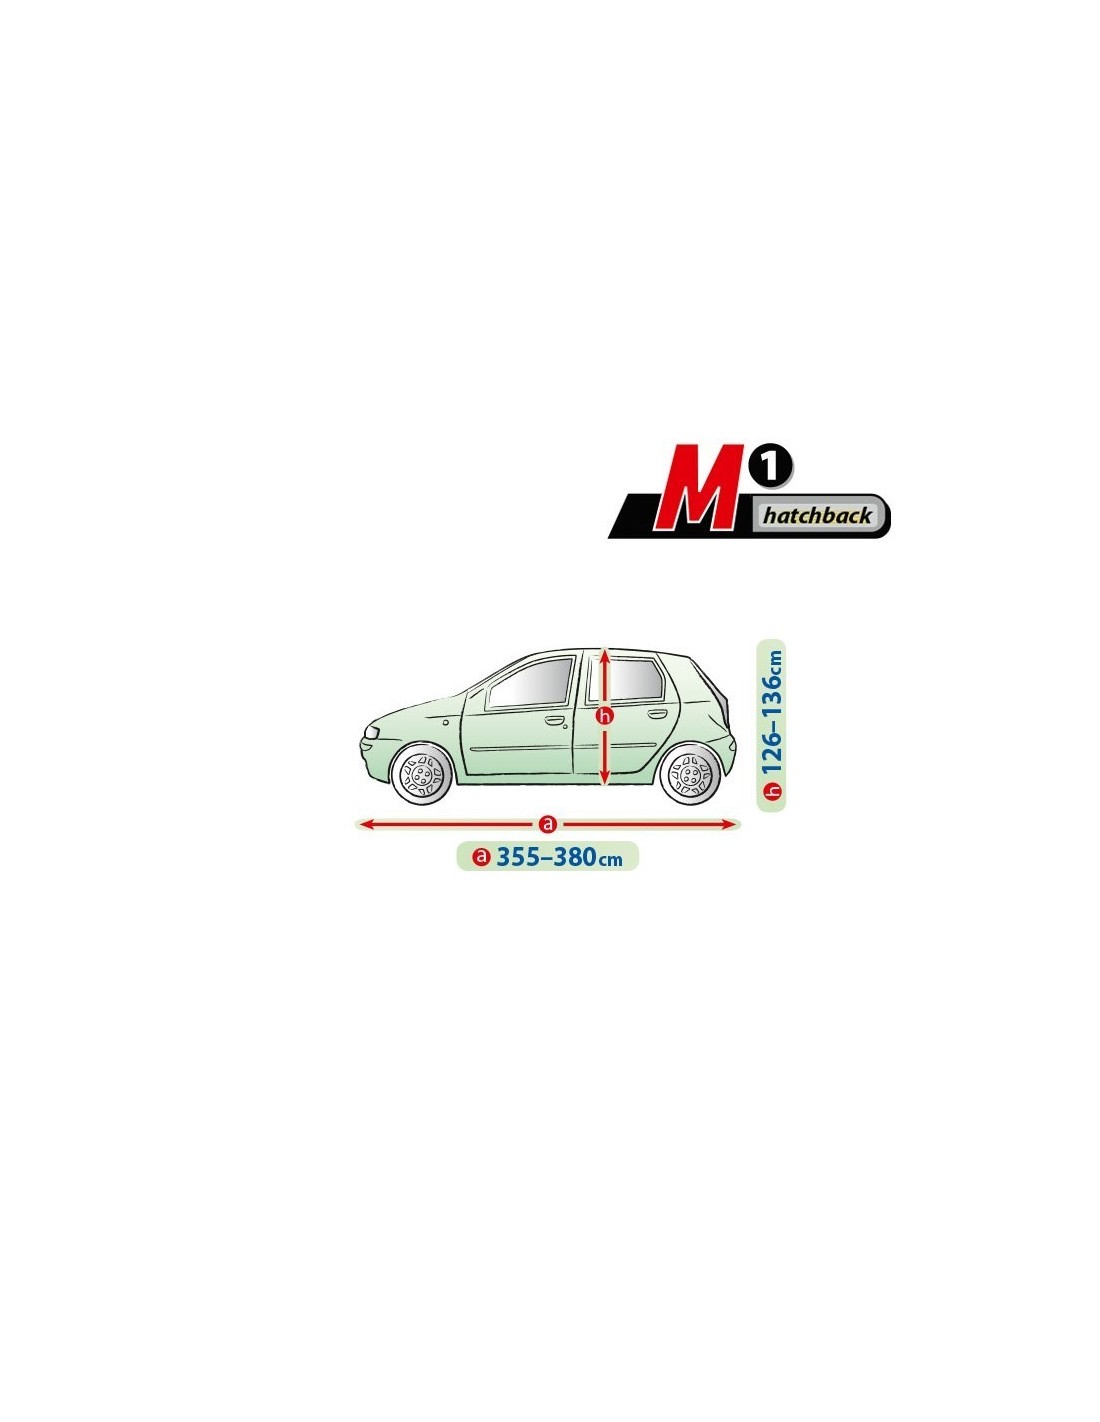 Funda exterior para coche Mobile Garage M1 Hatchback